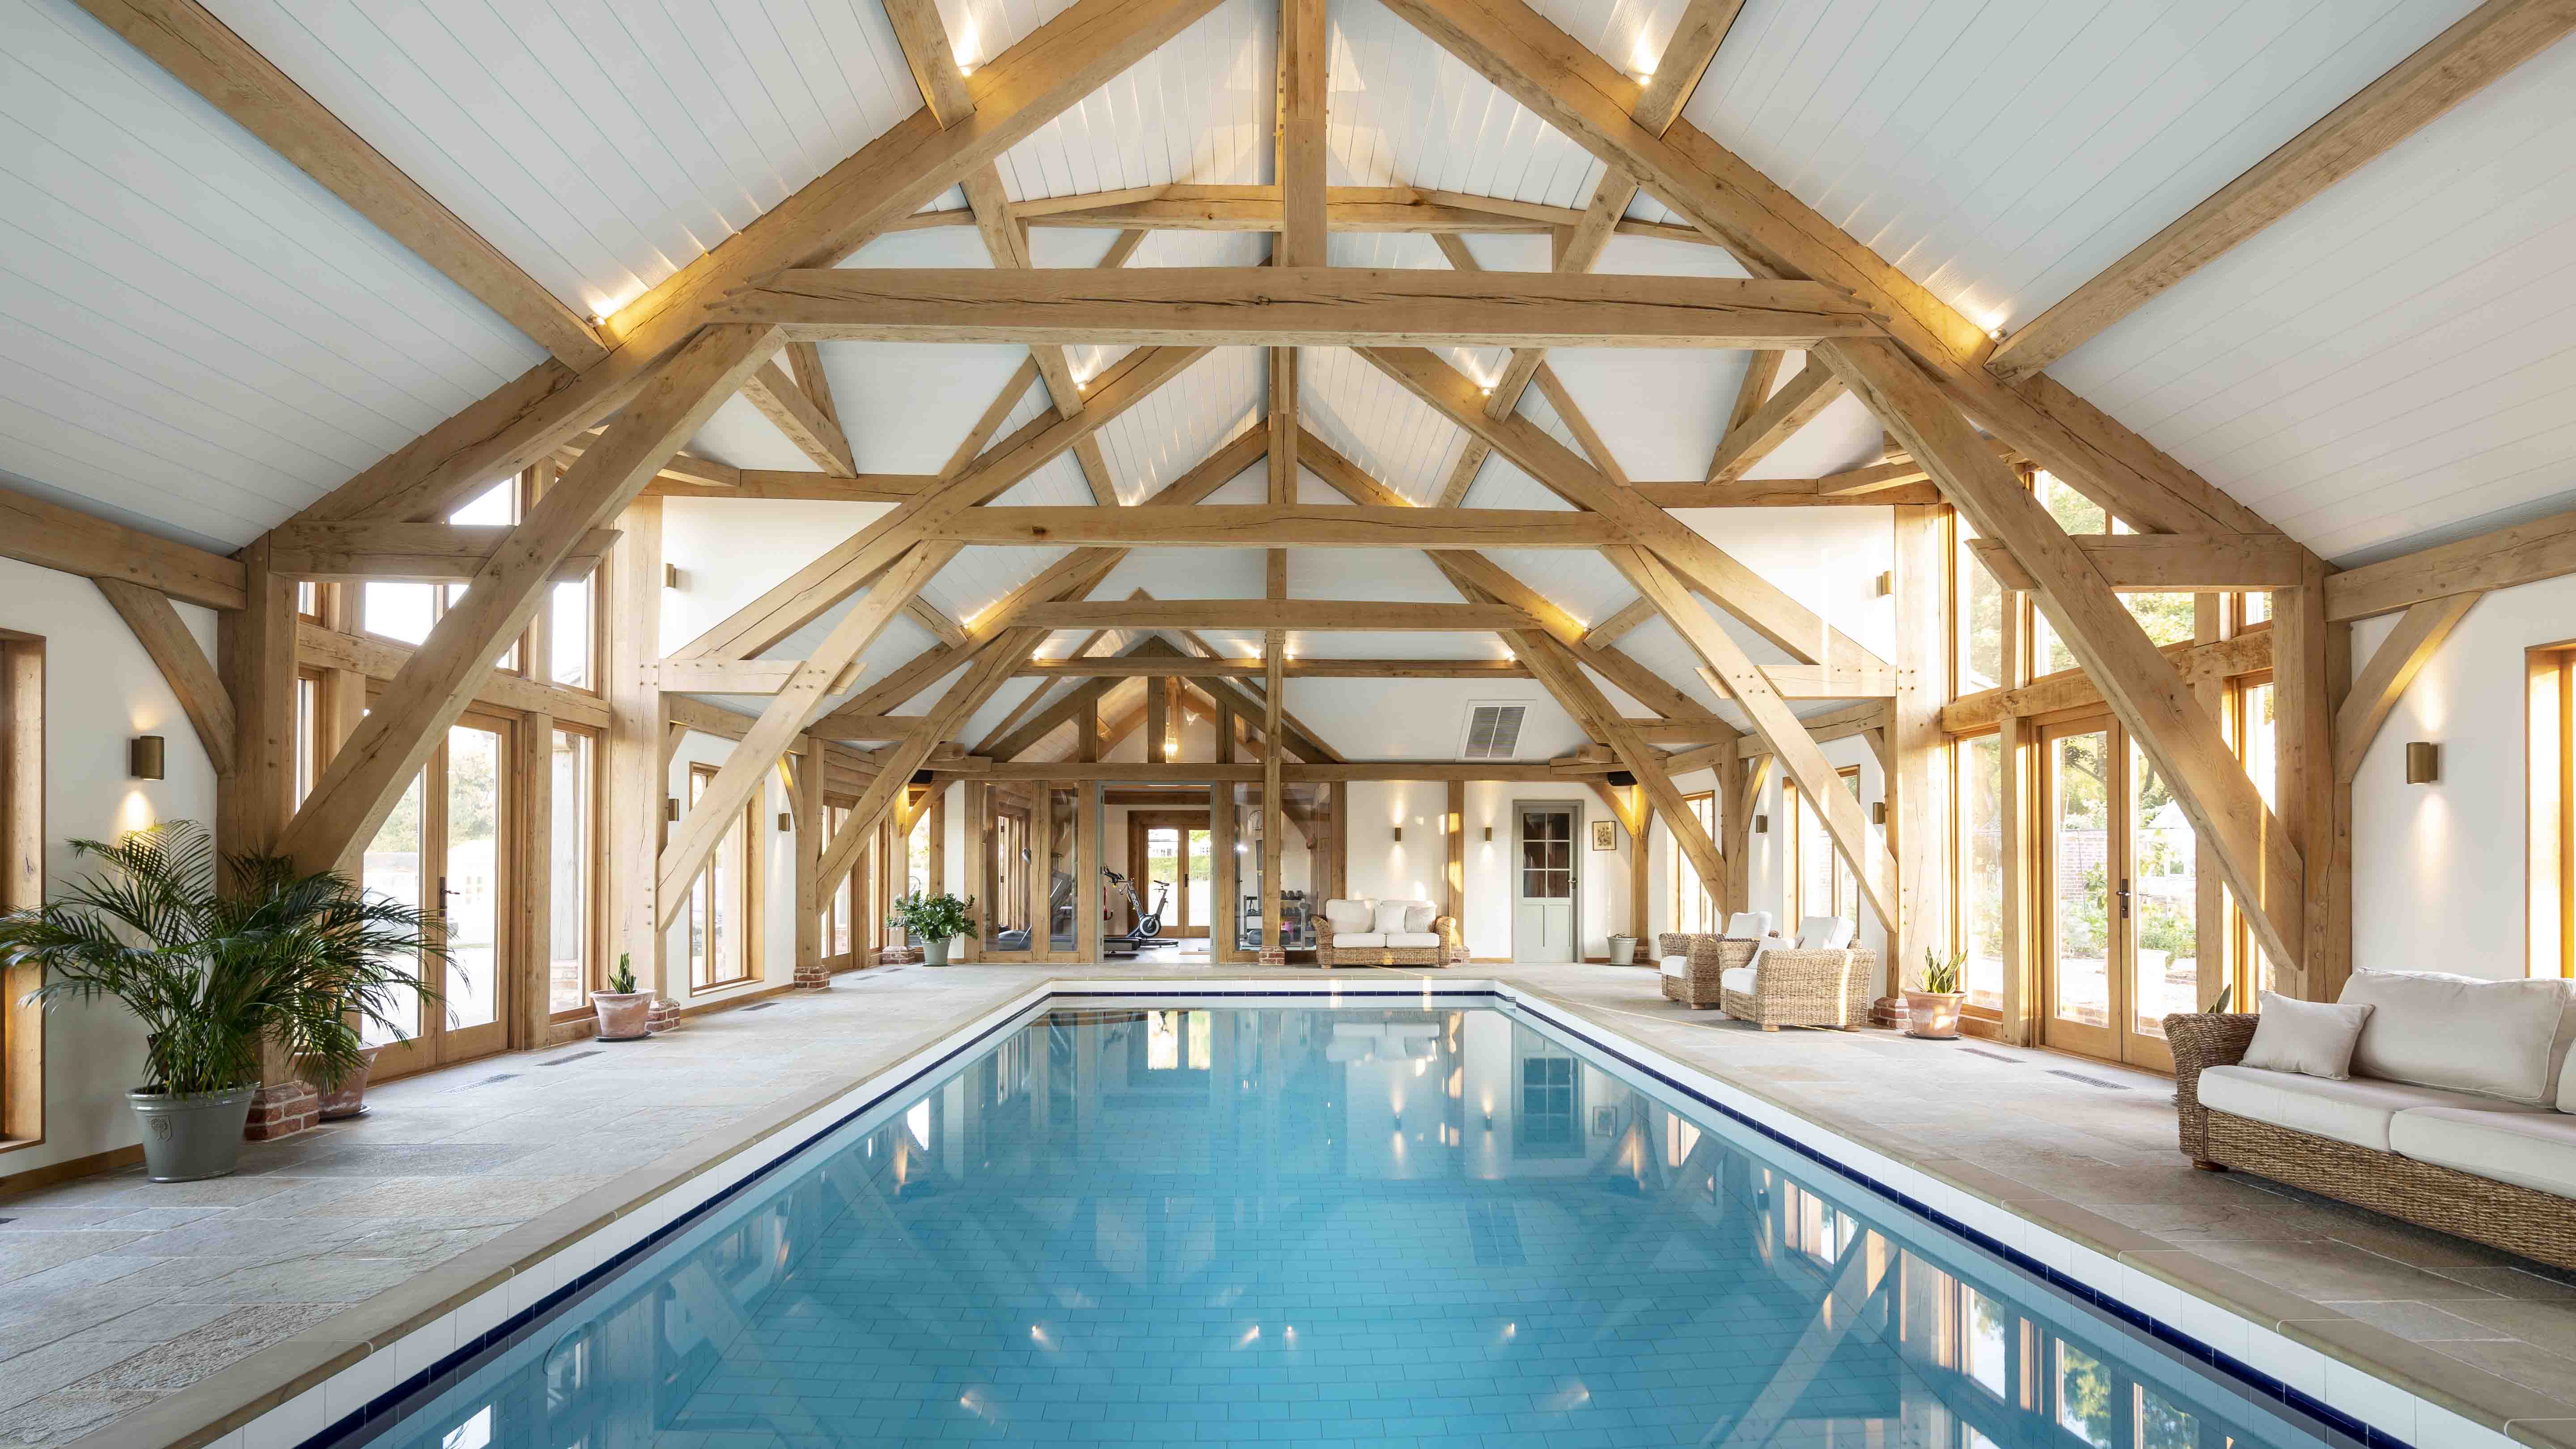 Indoor Home Swimming Pool Designs